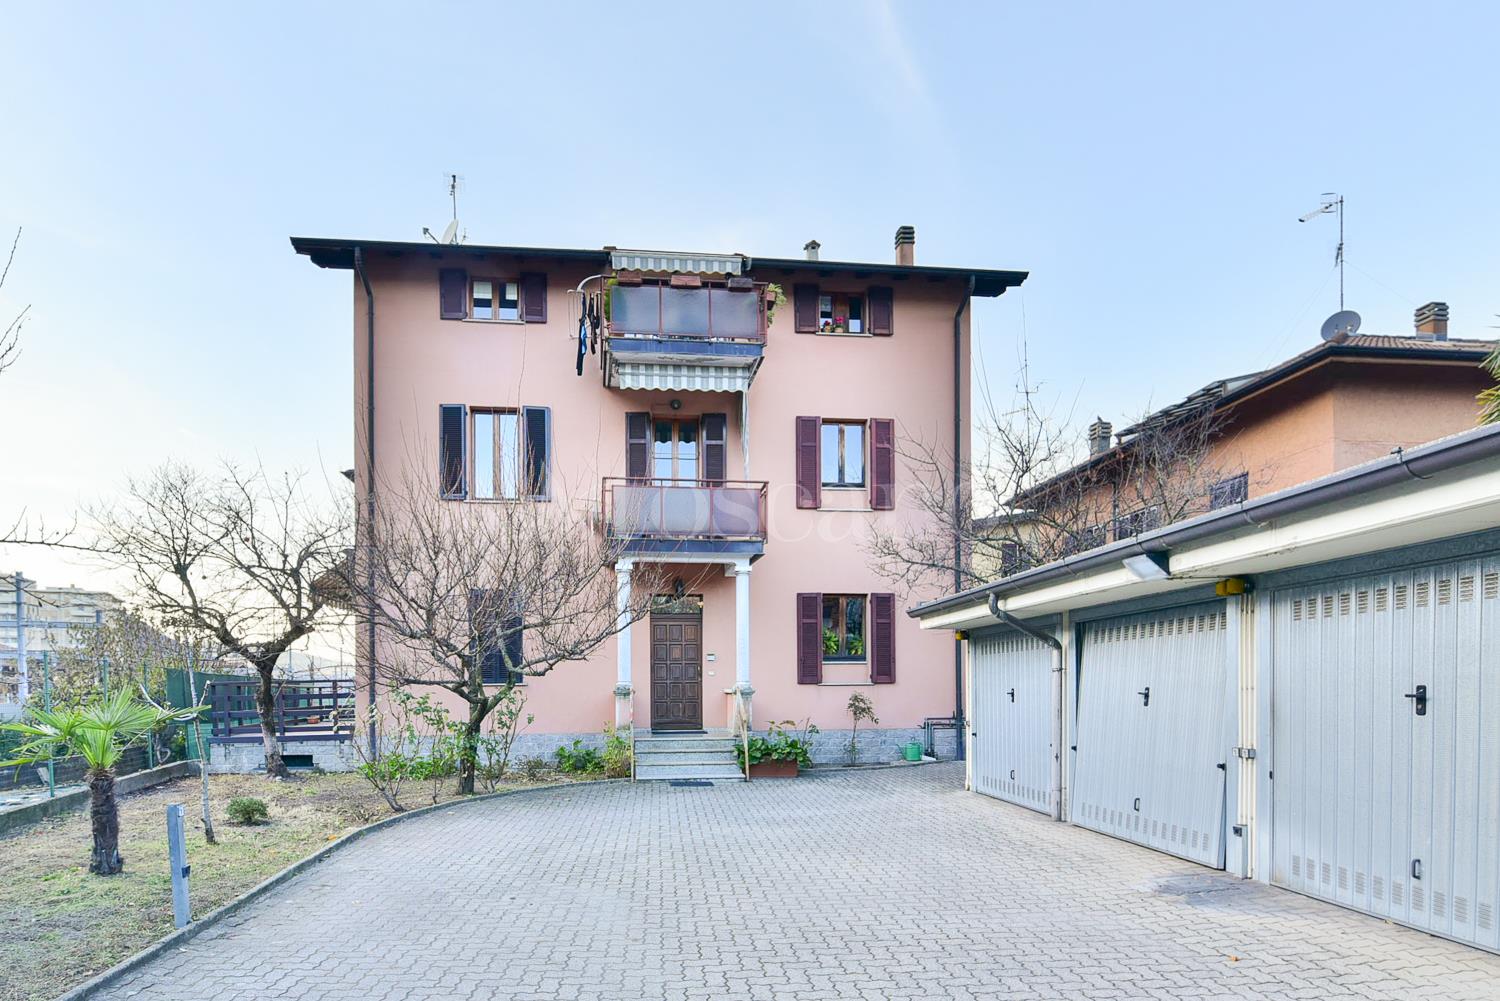 Casa a Como in Via Cesare Beccaria, Bellinzona